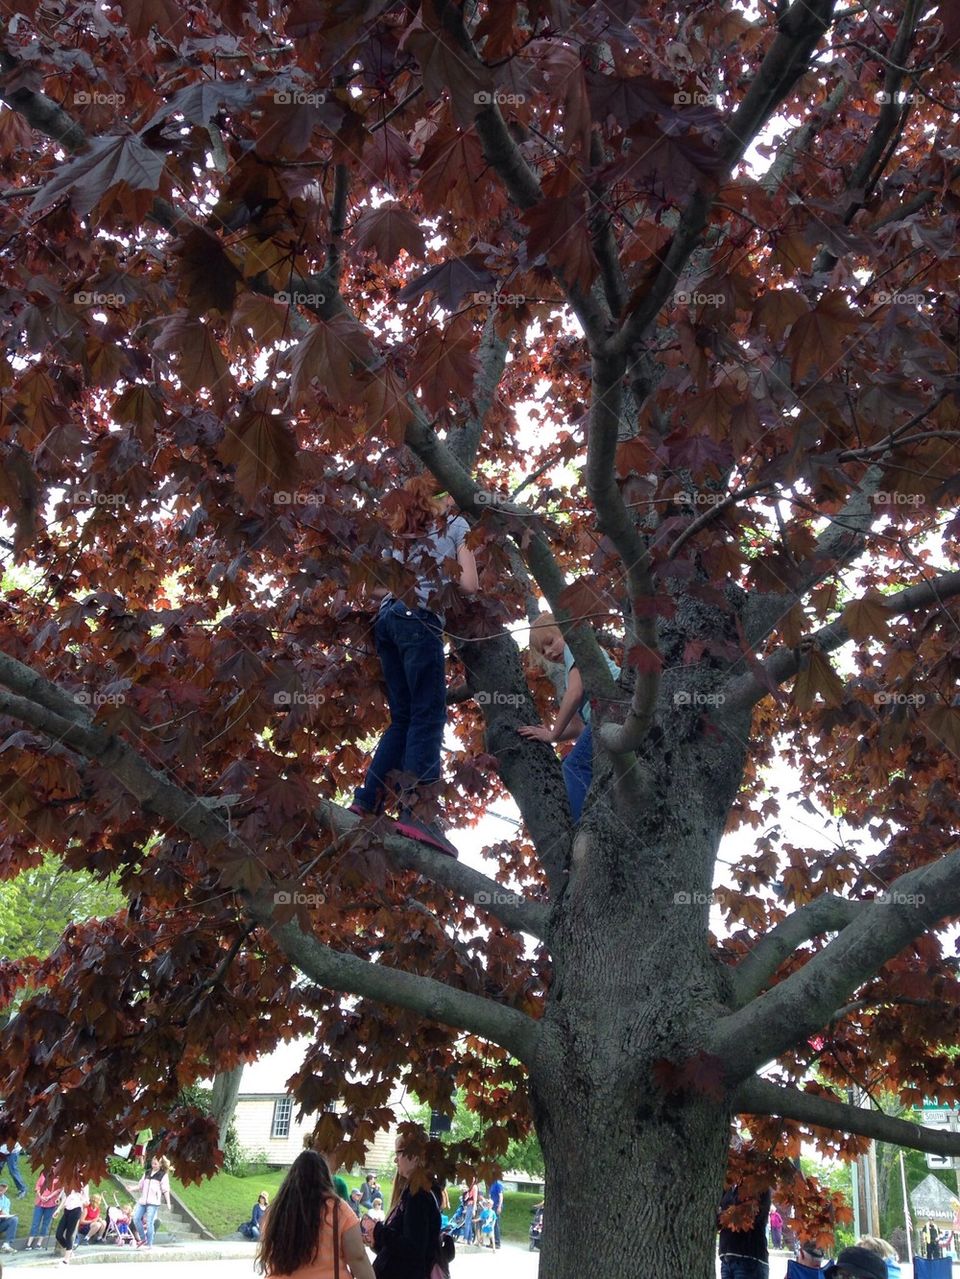 Tree climbing